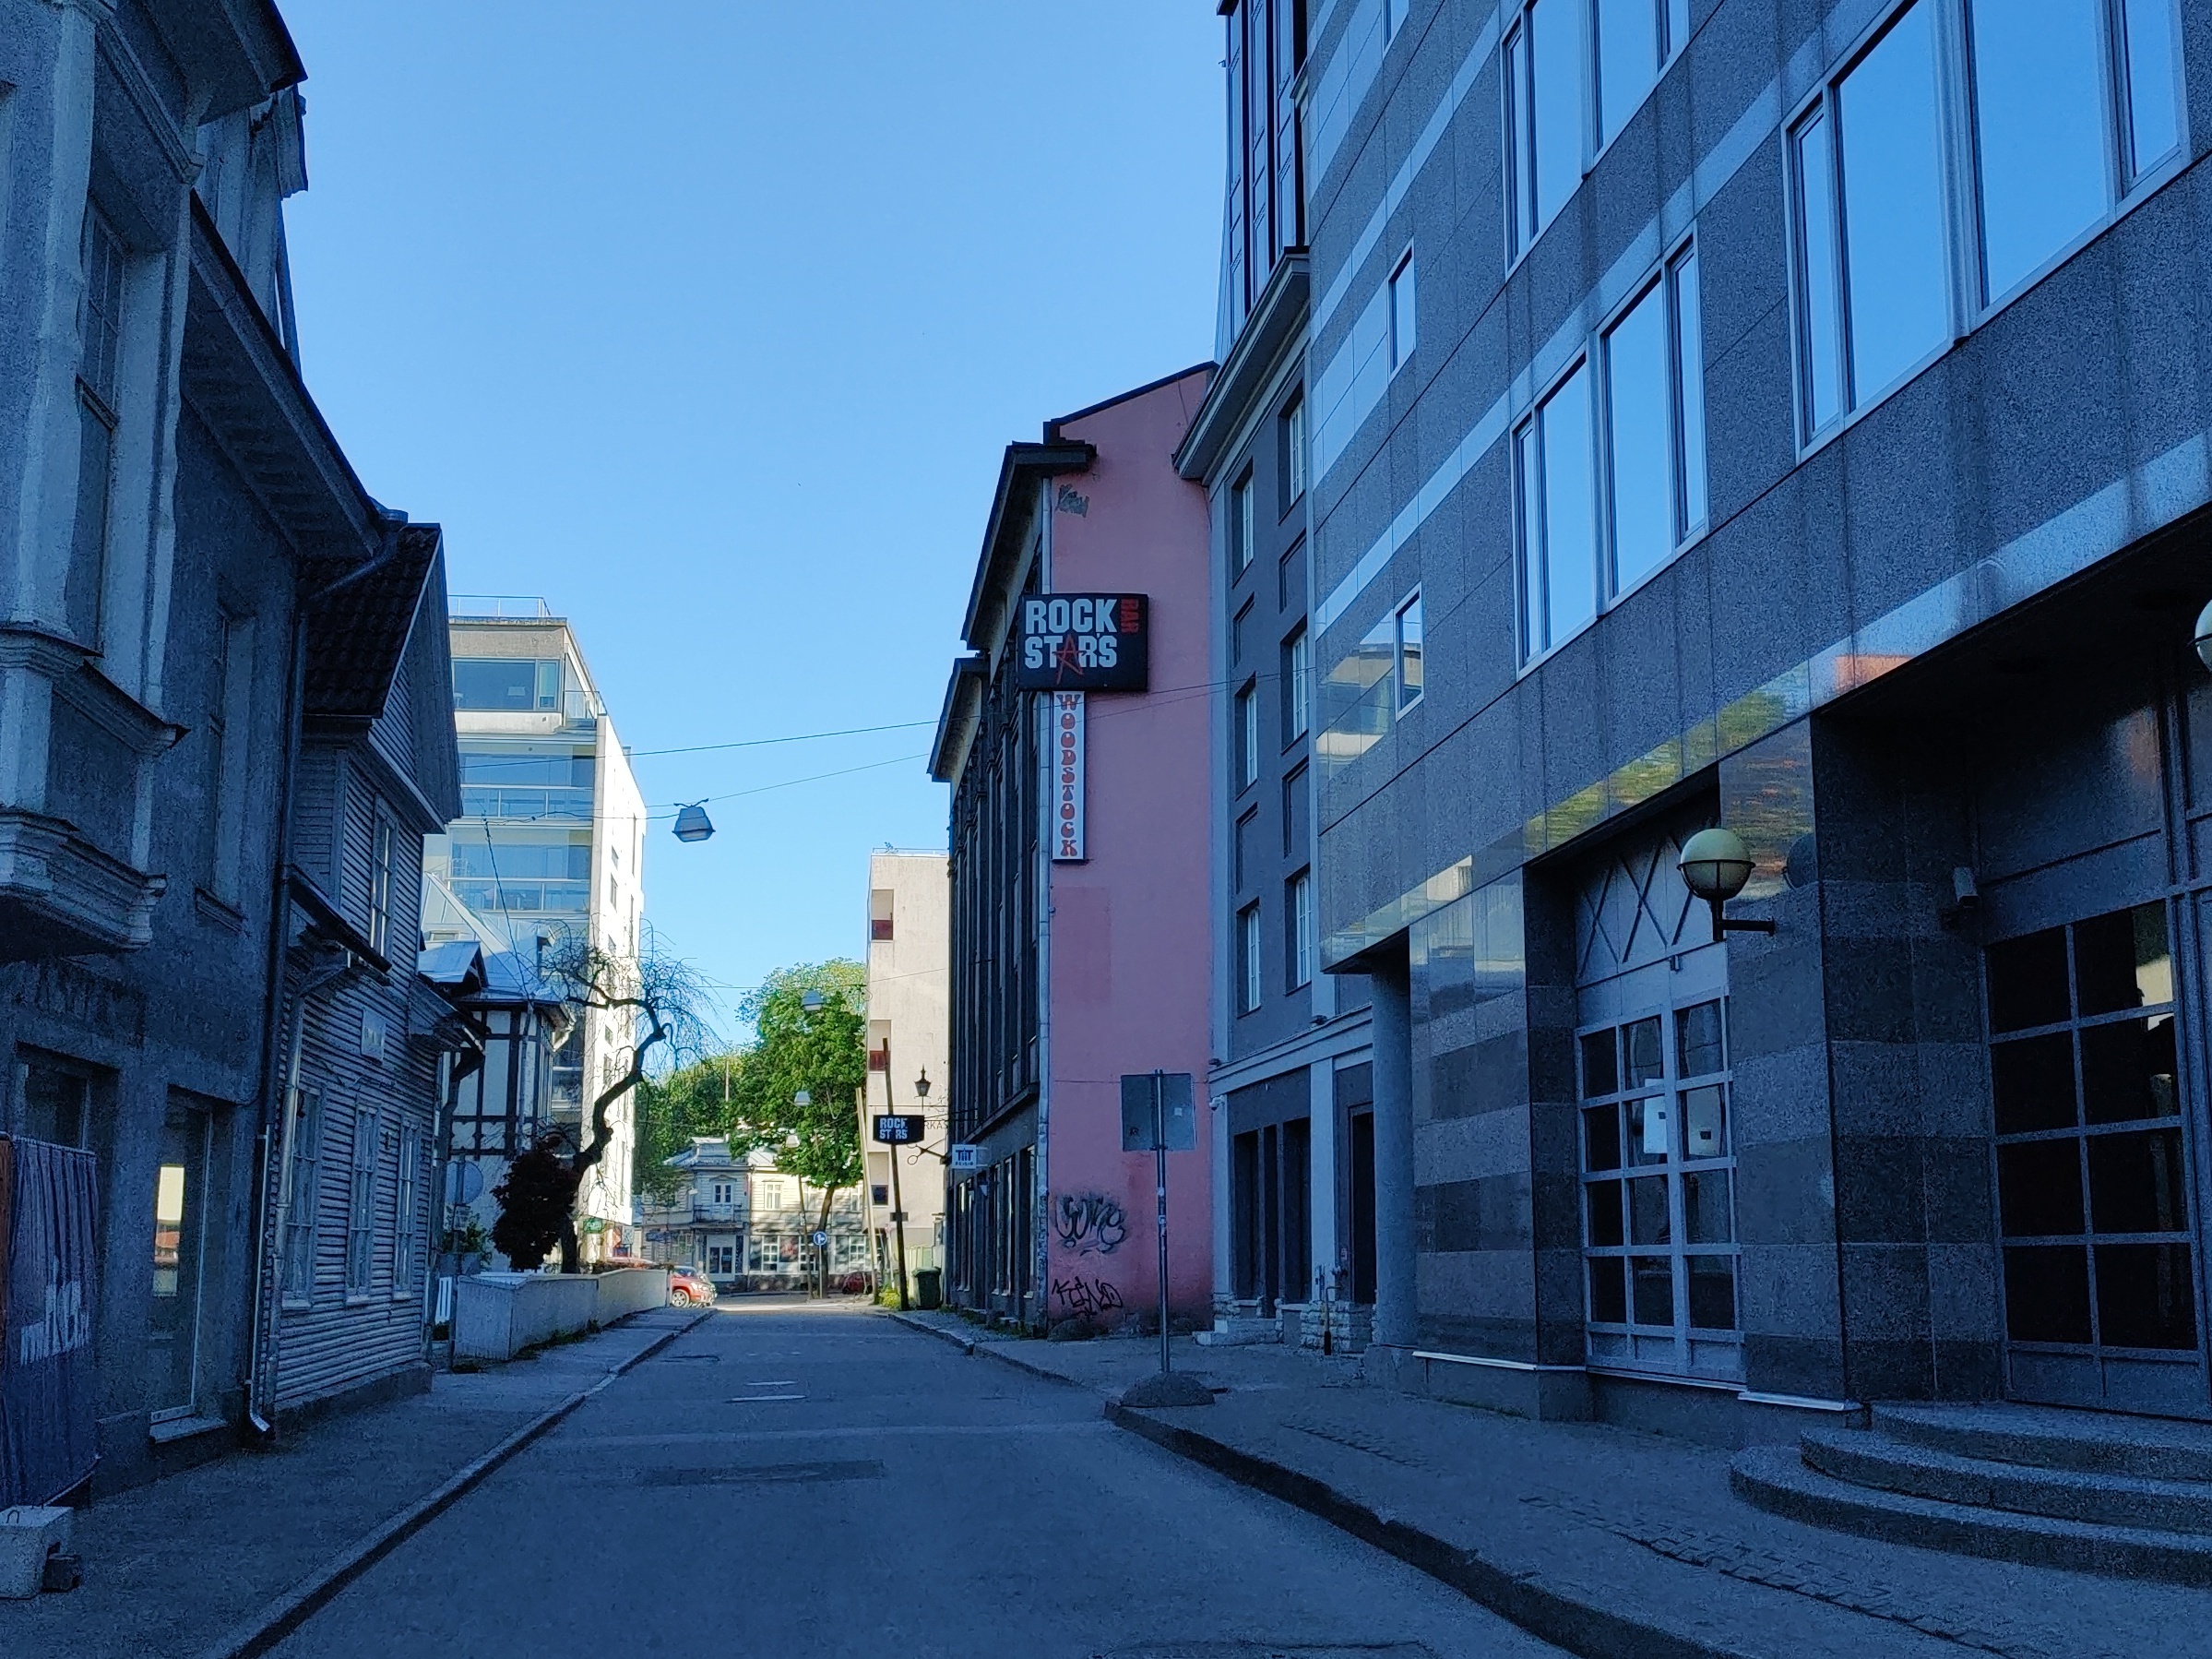 View of the building Tatari Street 4. rephoto